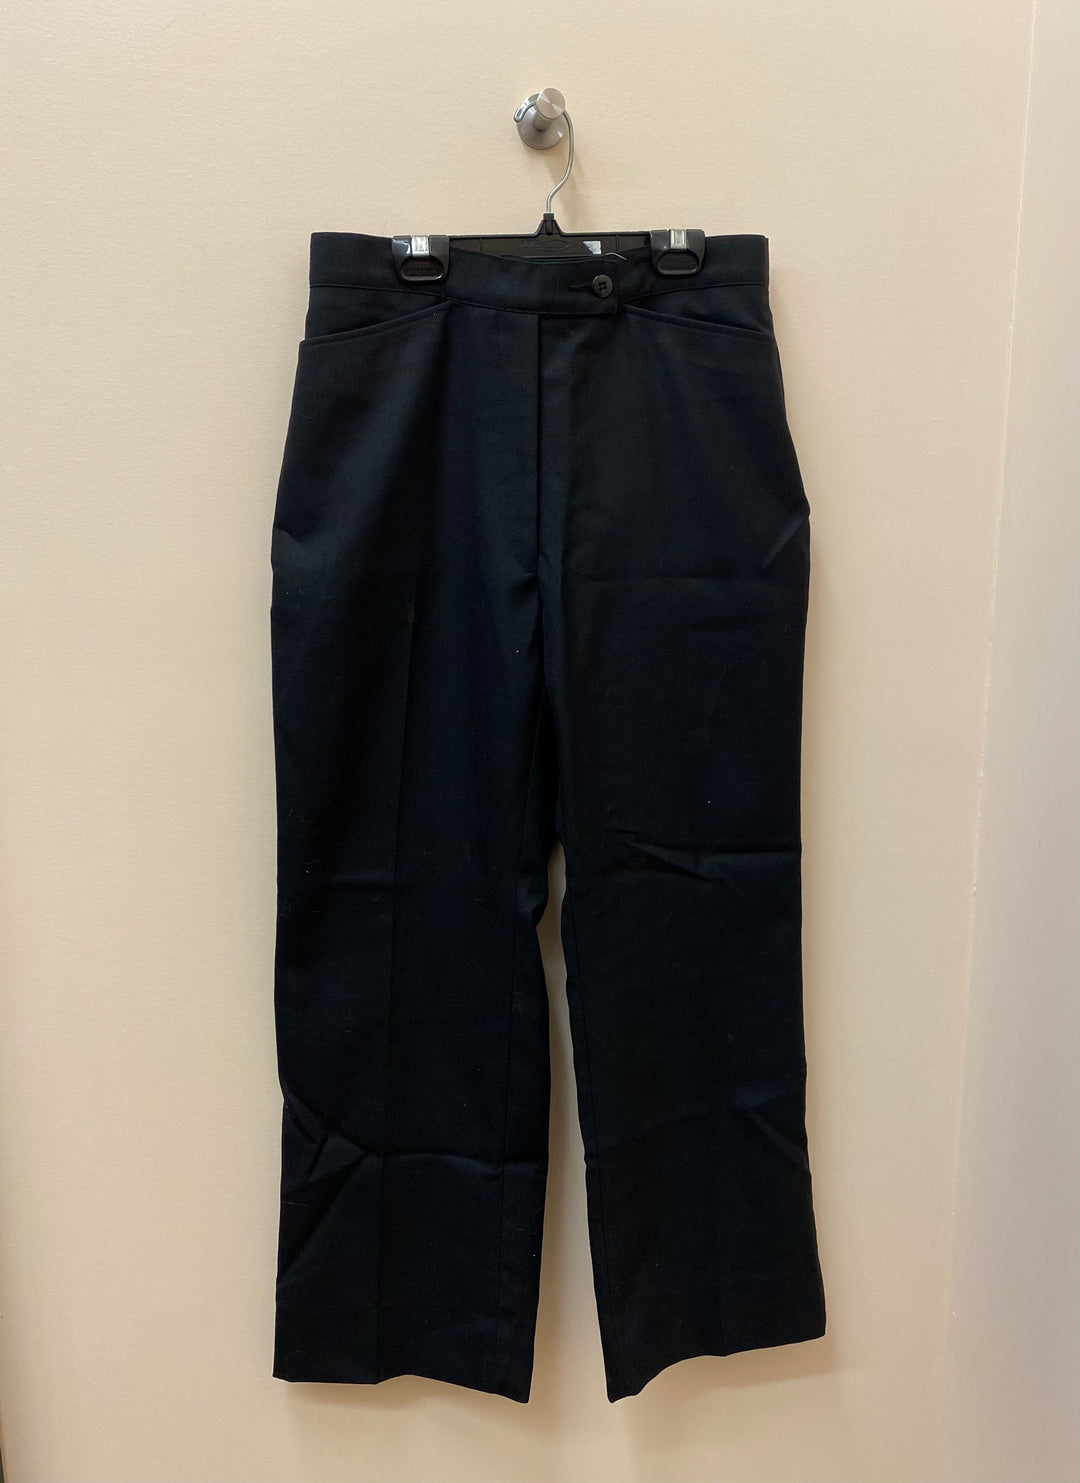 Women’s Dress Pants - Size 16 Short